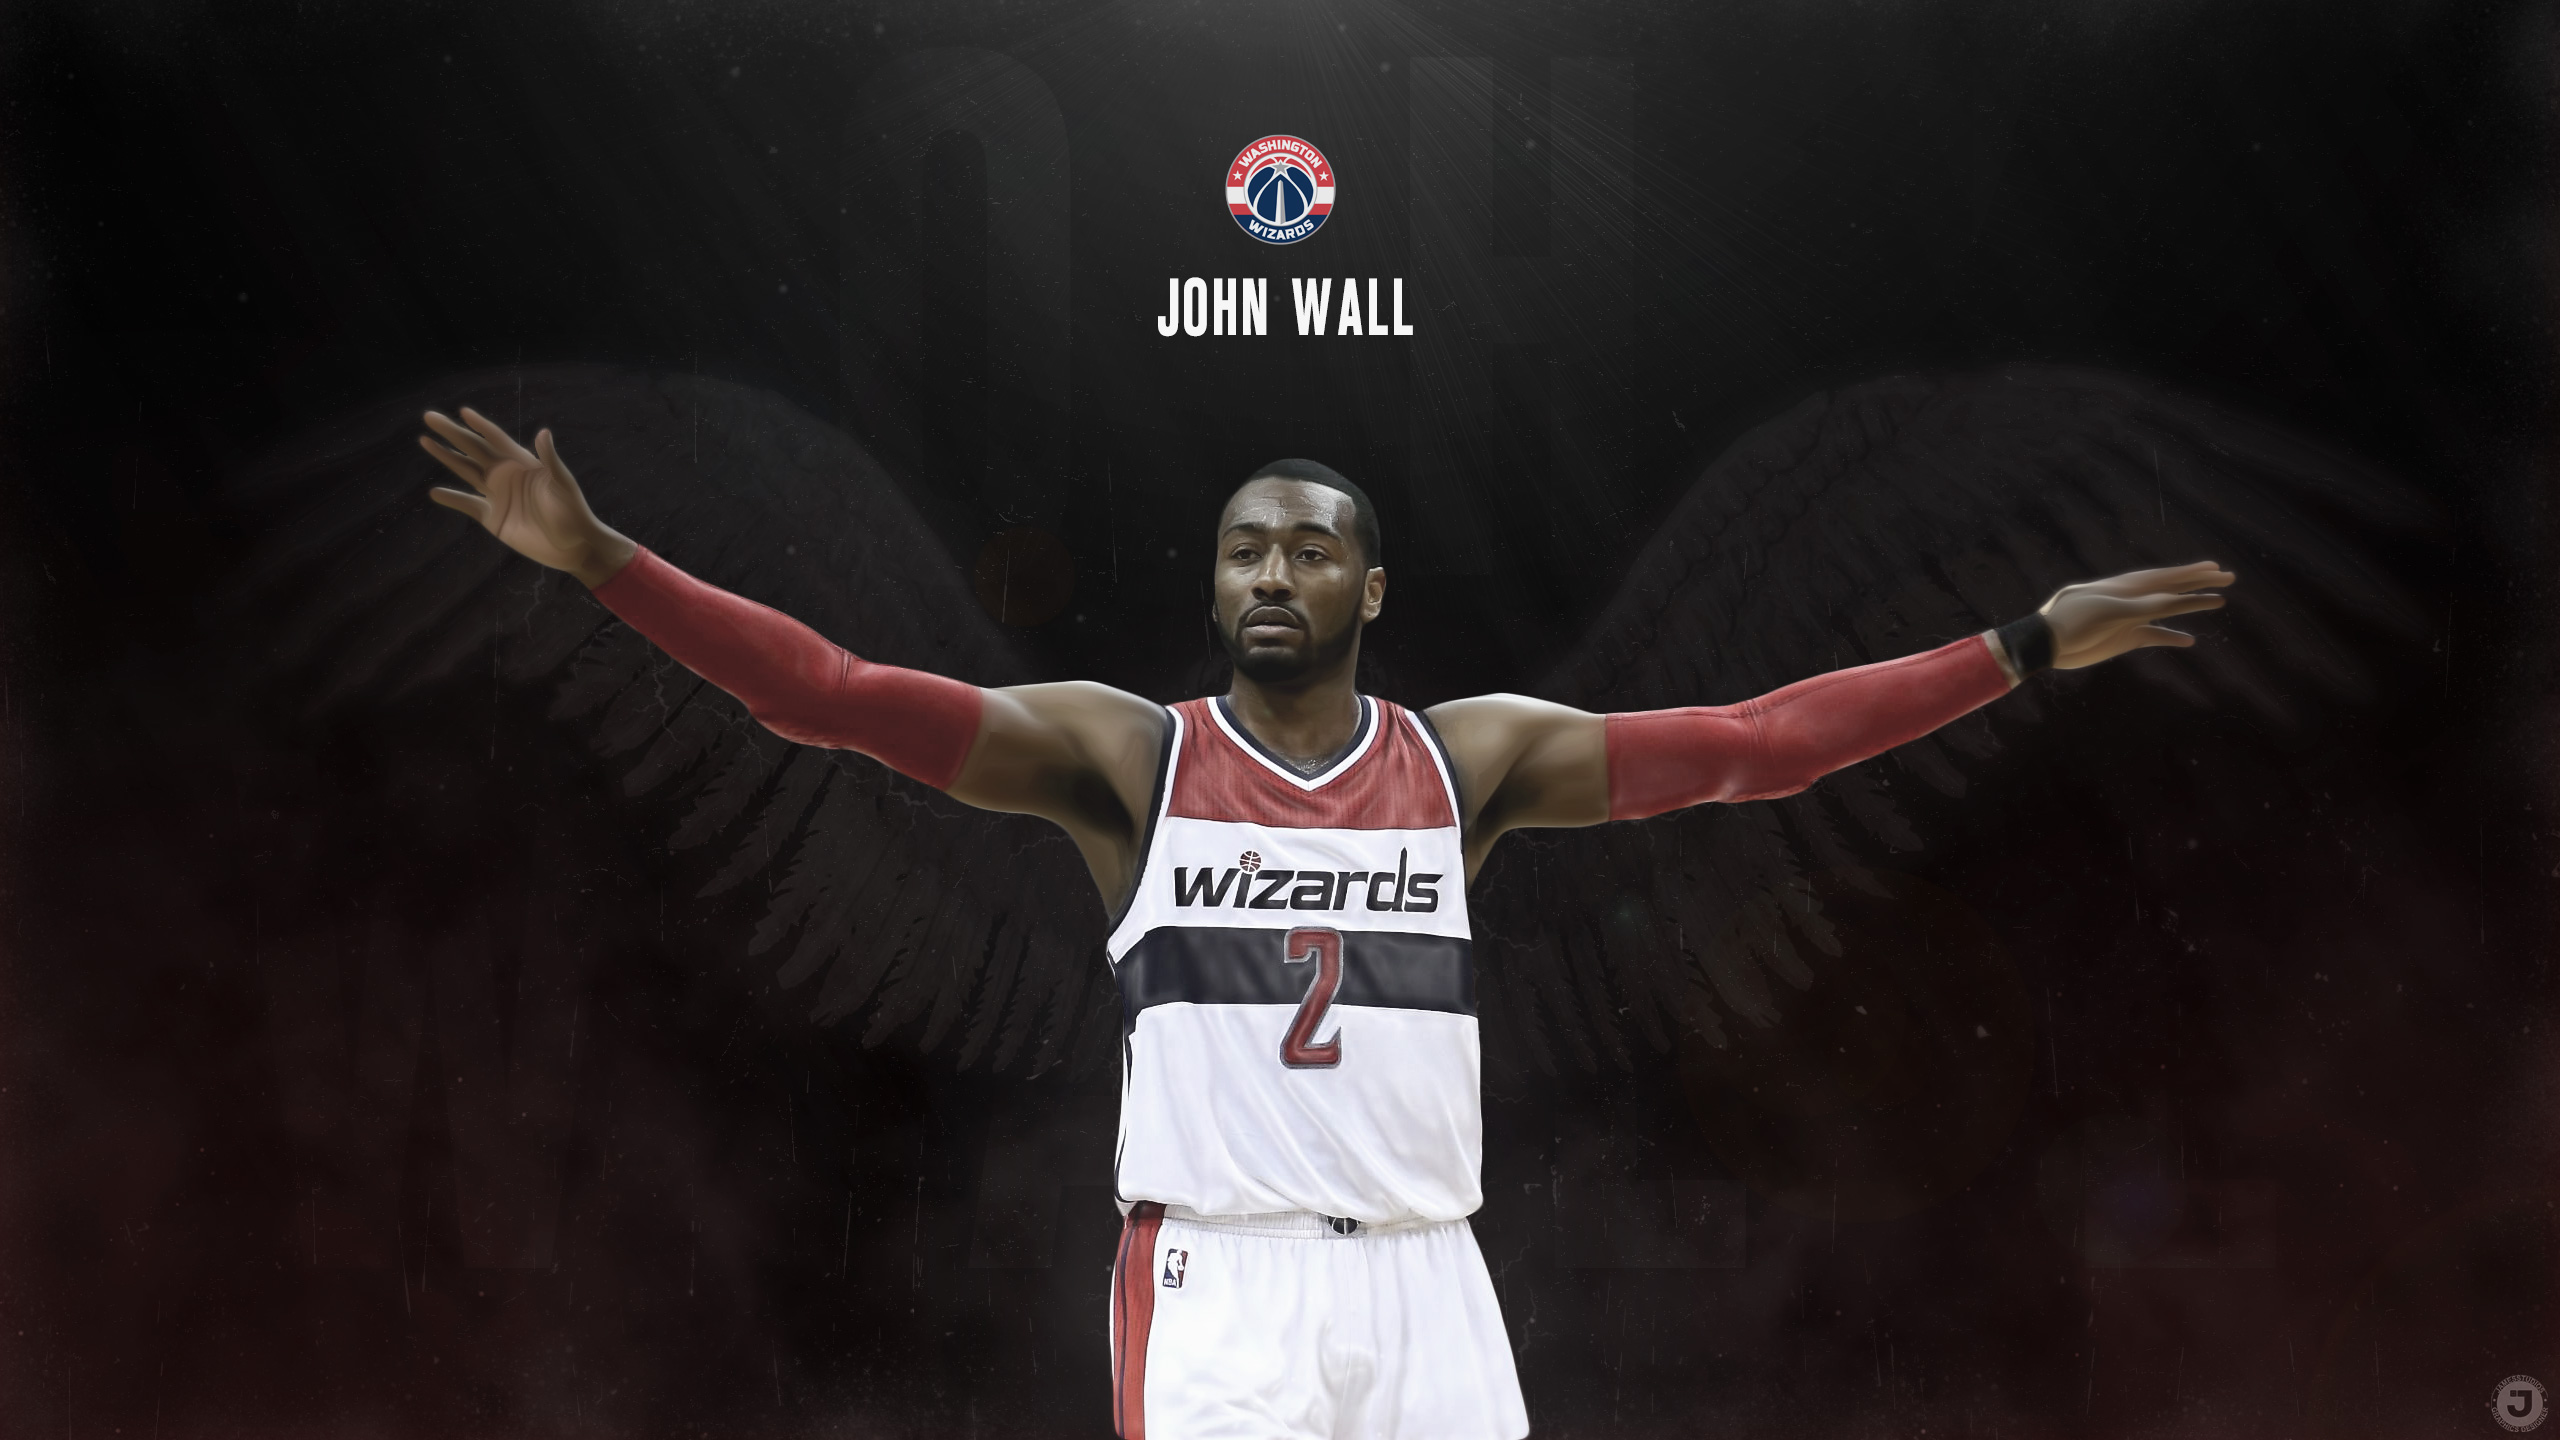 John Wall Wizards 2015 2560x1440 Wallpaper